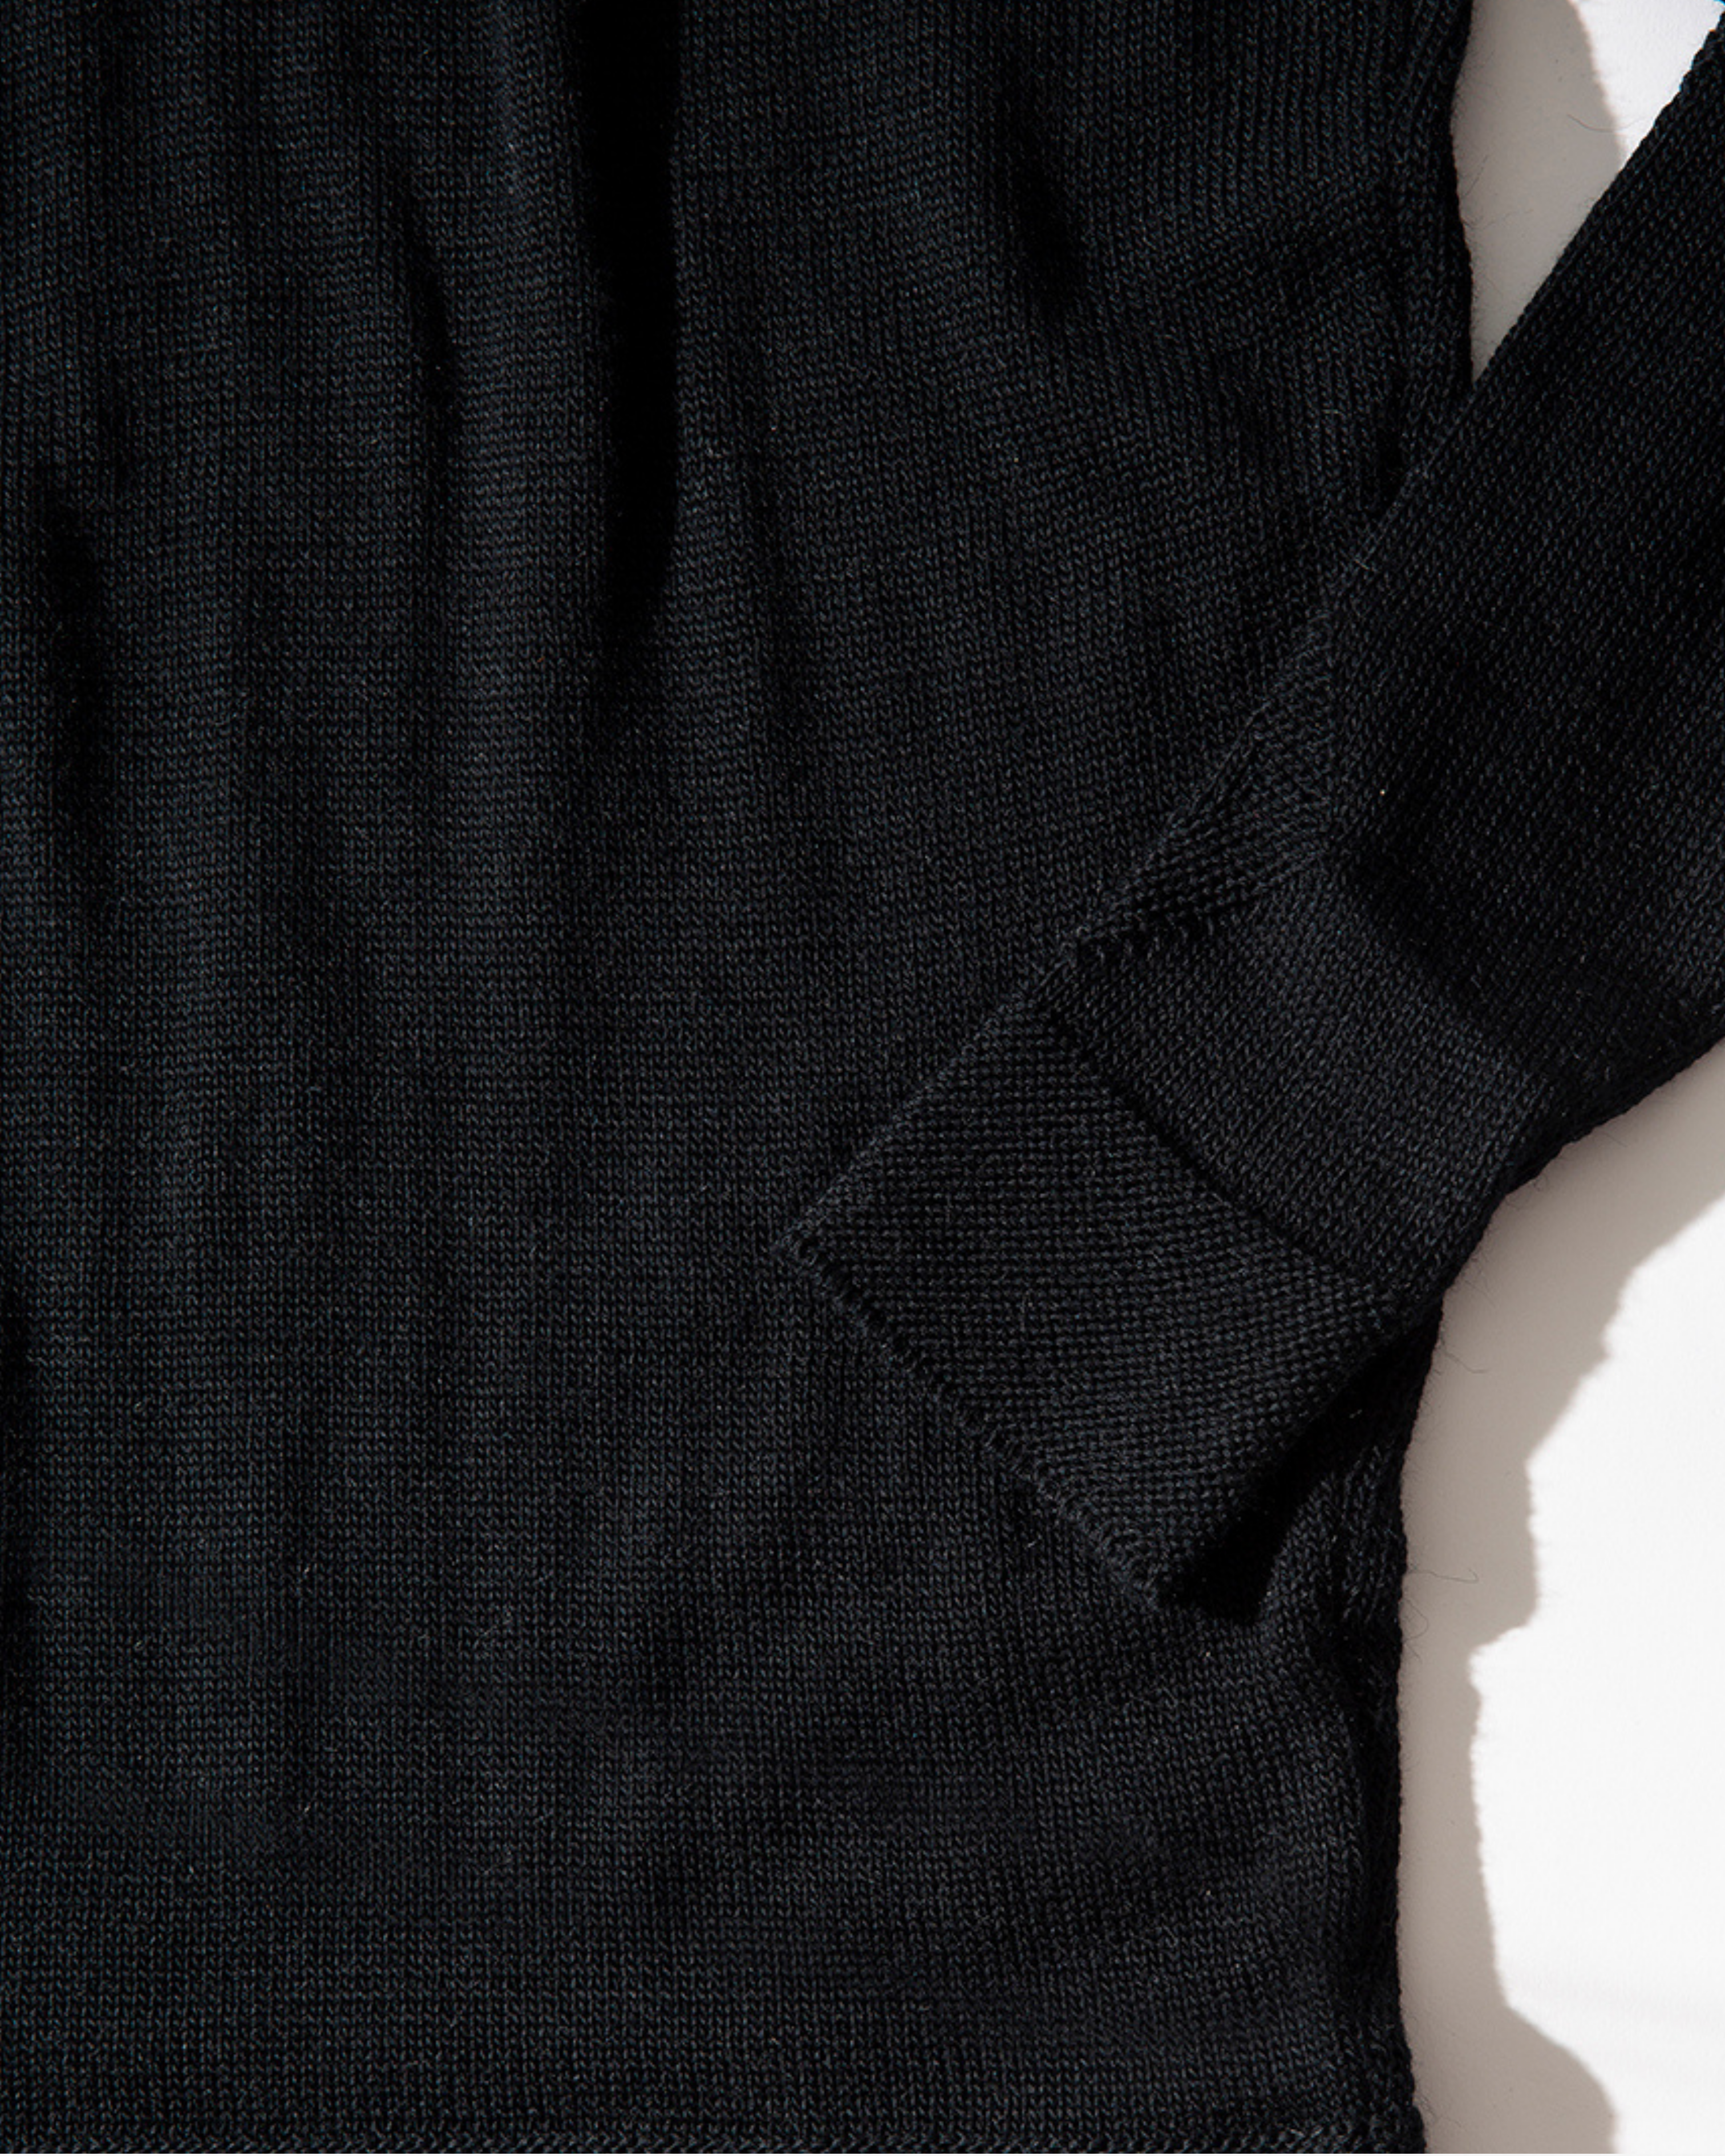 Wool & Mohair V-Neck Sweater - Black Beauty